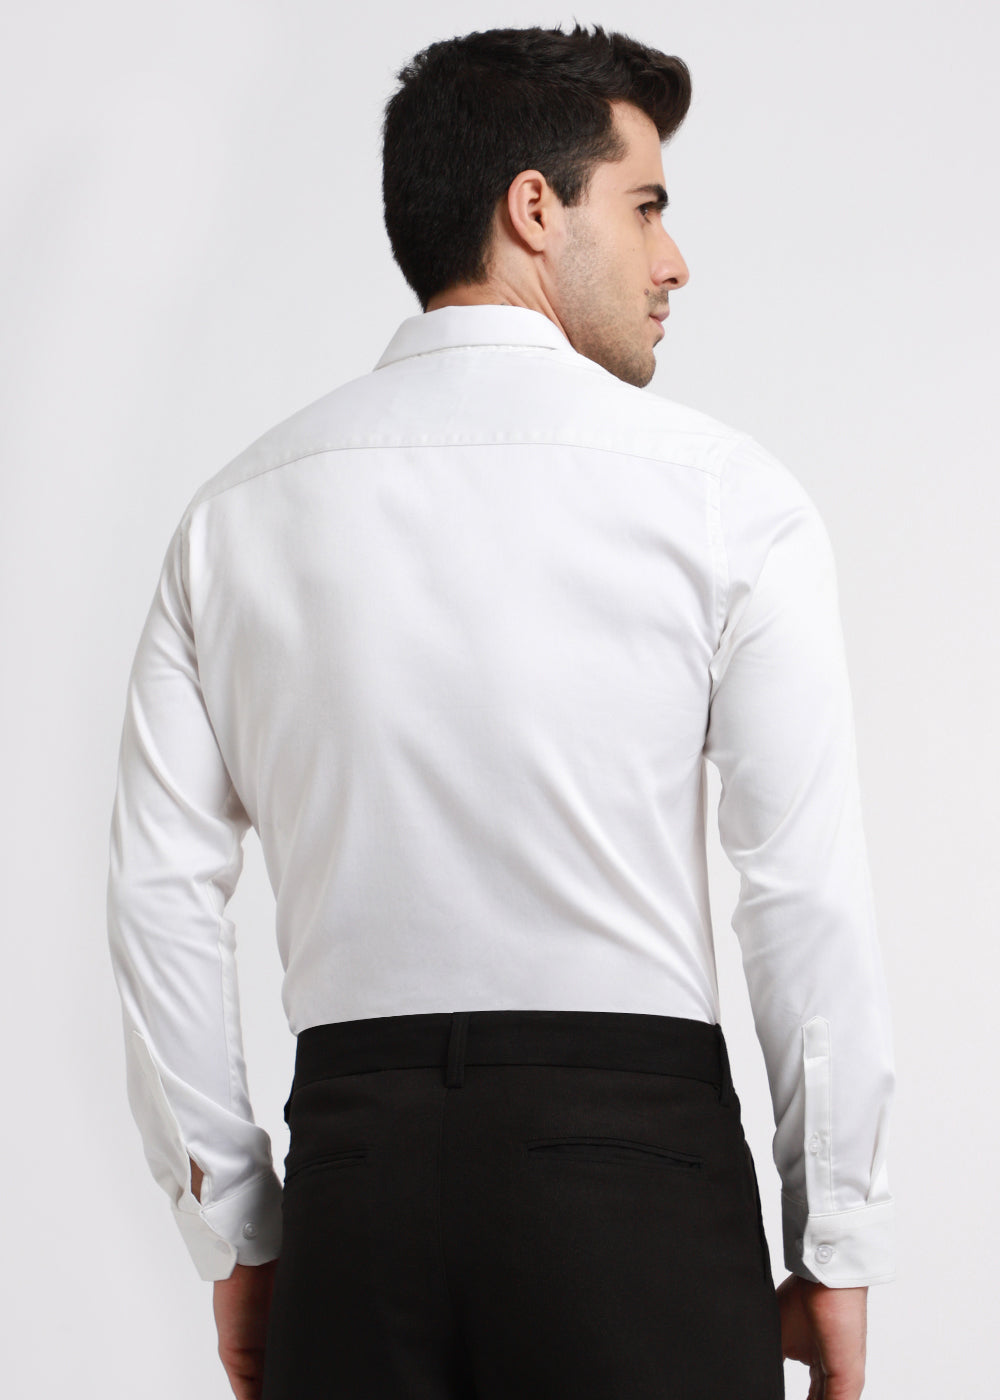 Sequence debonair designer white shirt